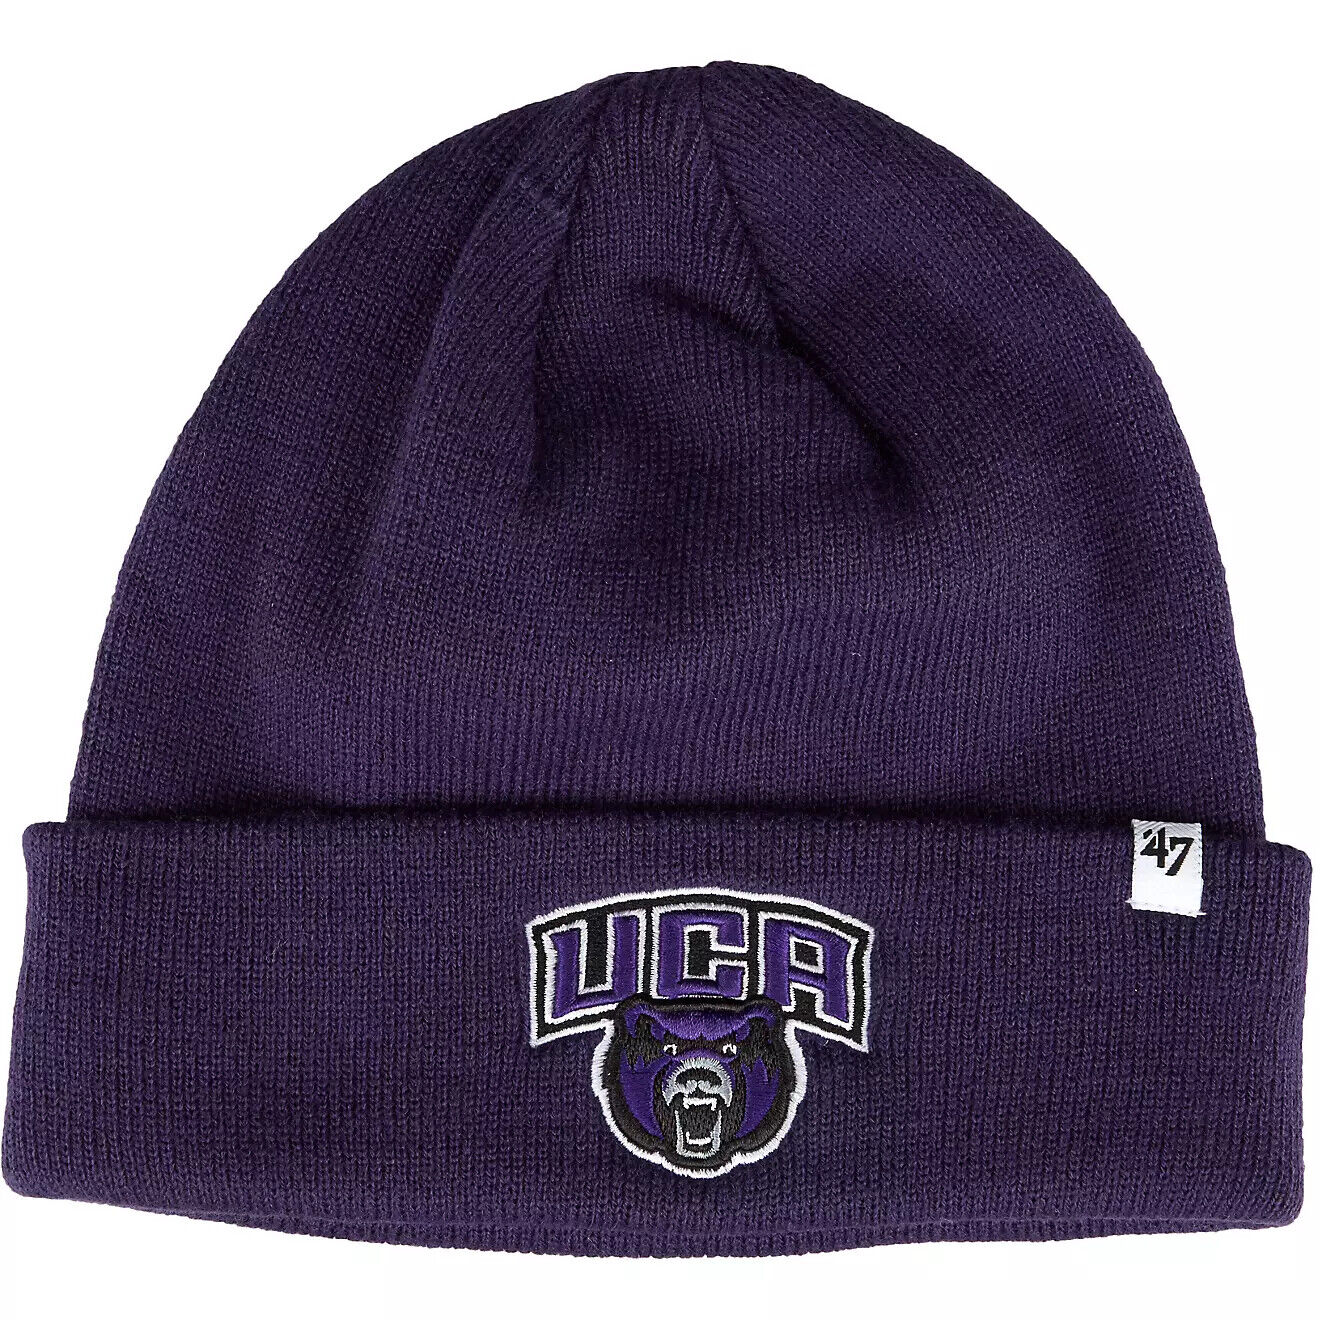 Central Arkansas Sugar Bears Purple '47 Brand Raised Cuff Knit Cap/Hat